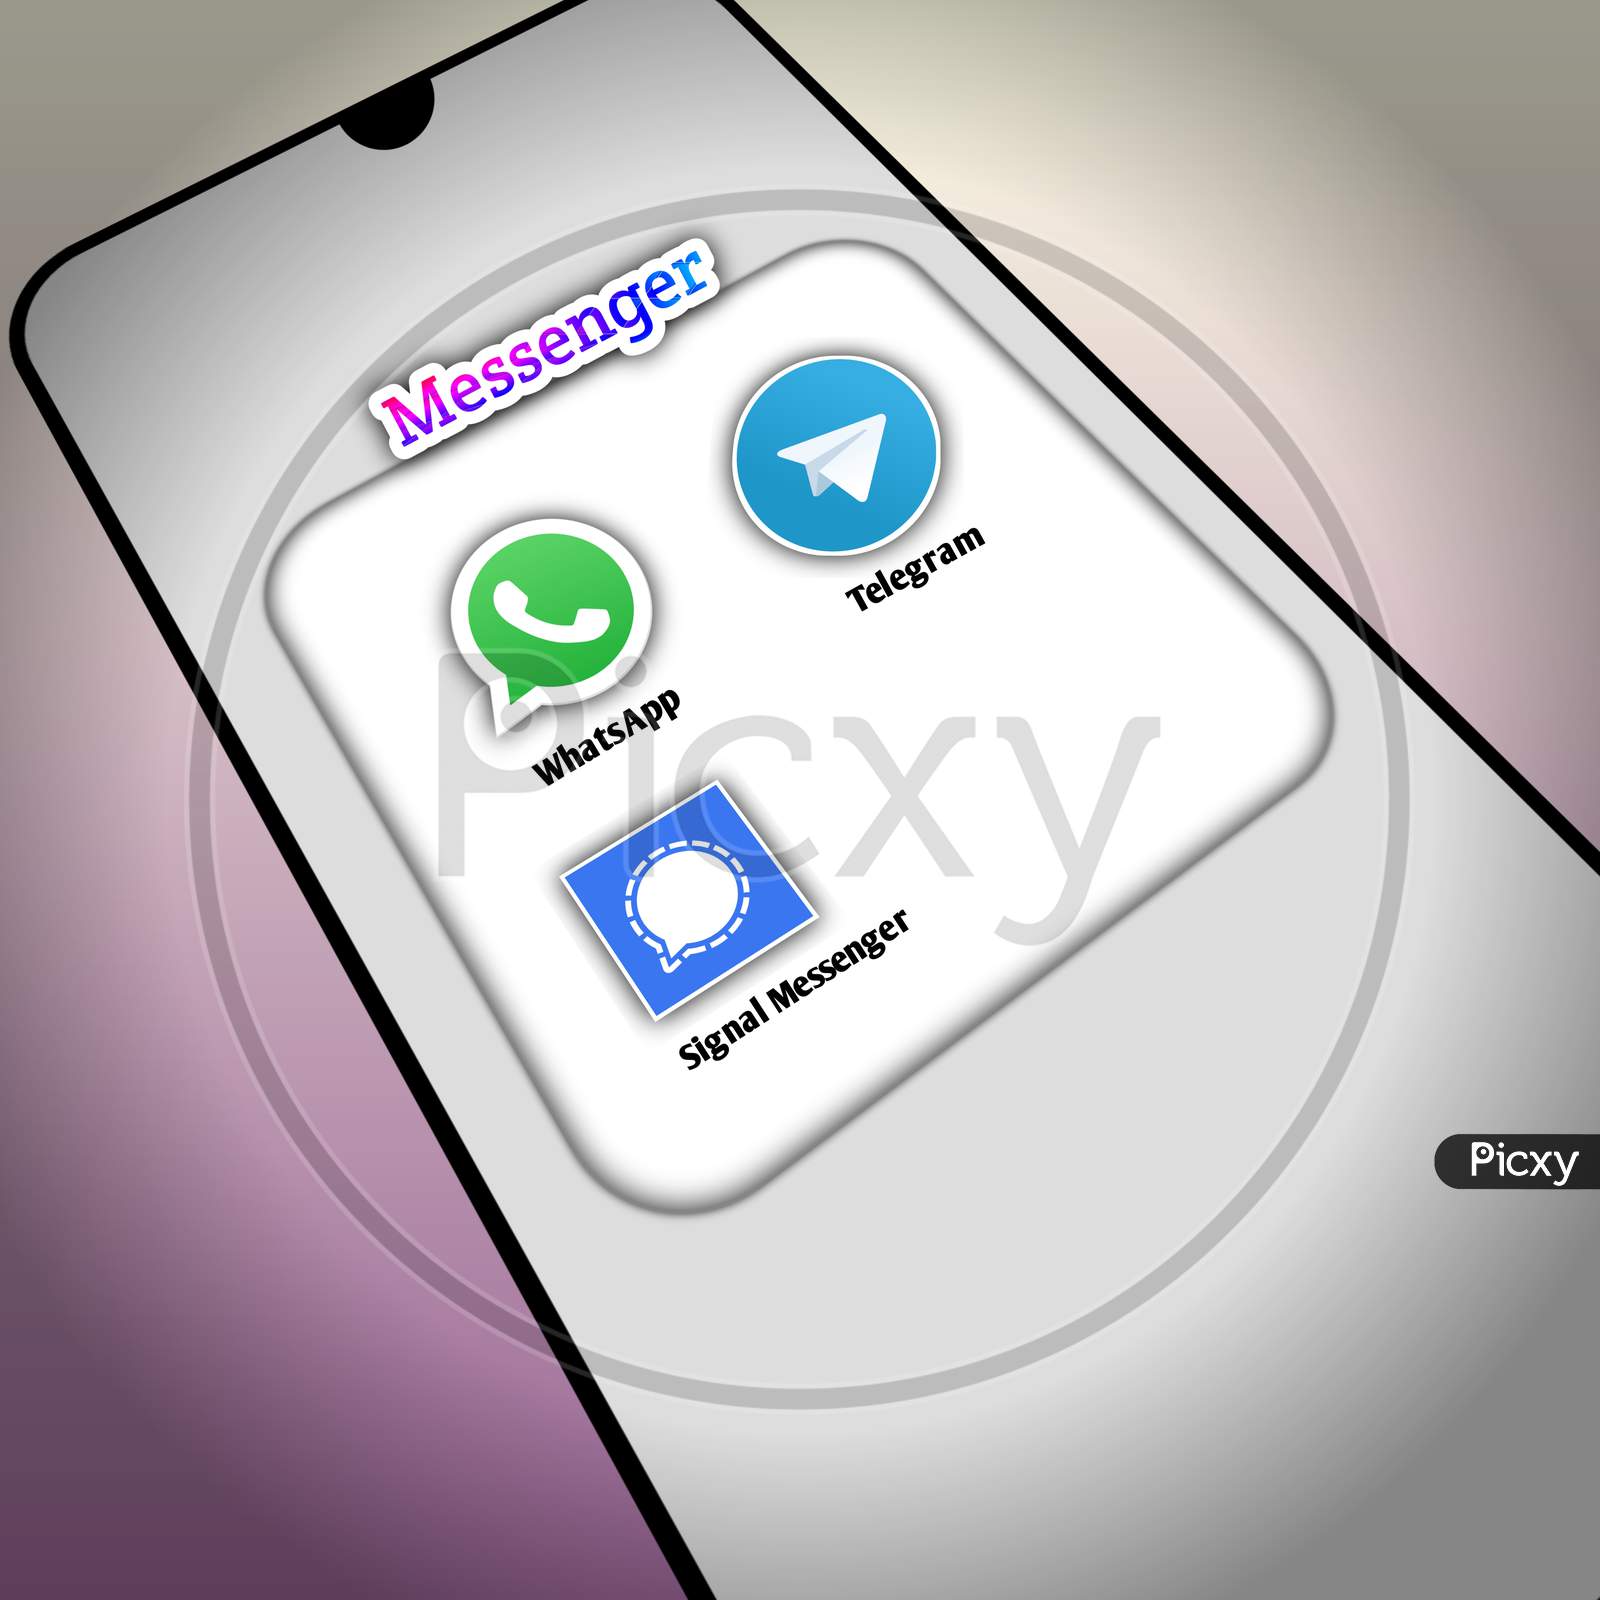 Messenger Apps